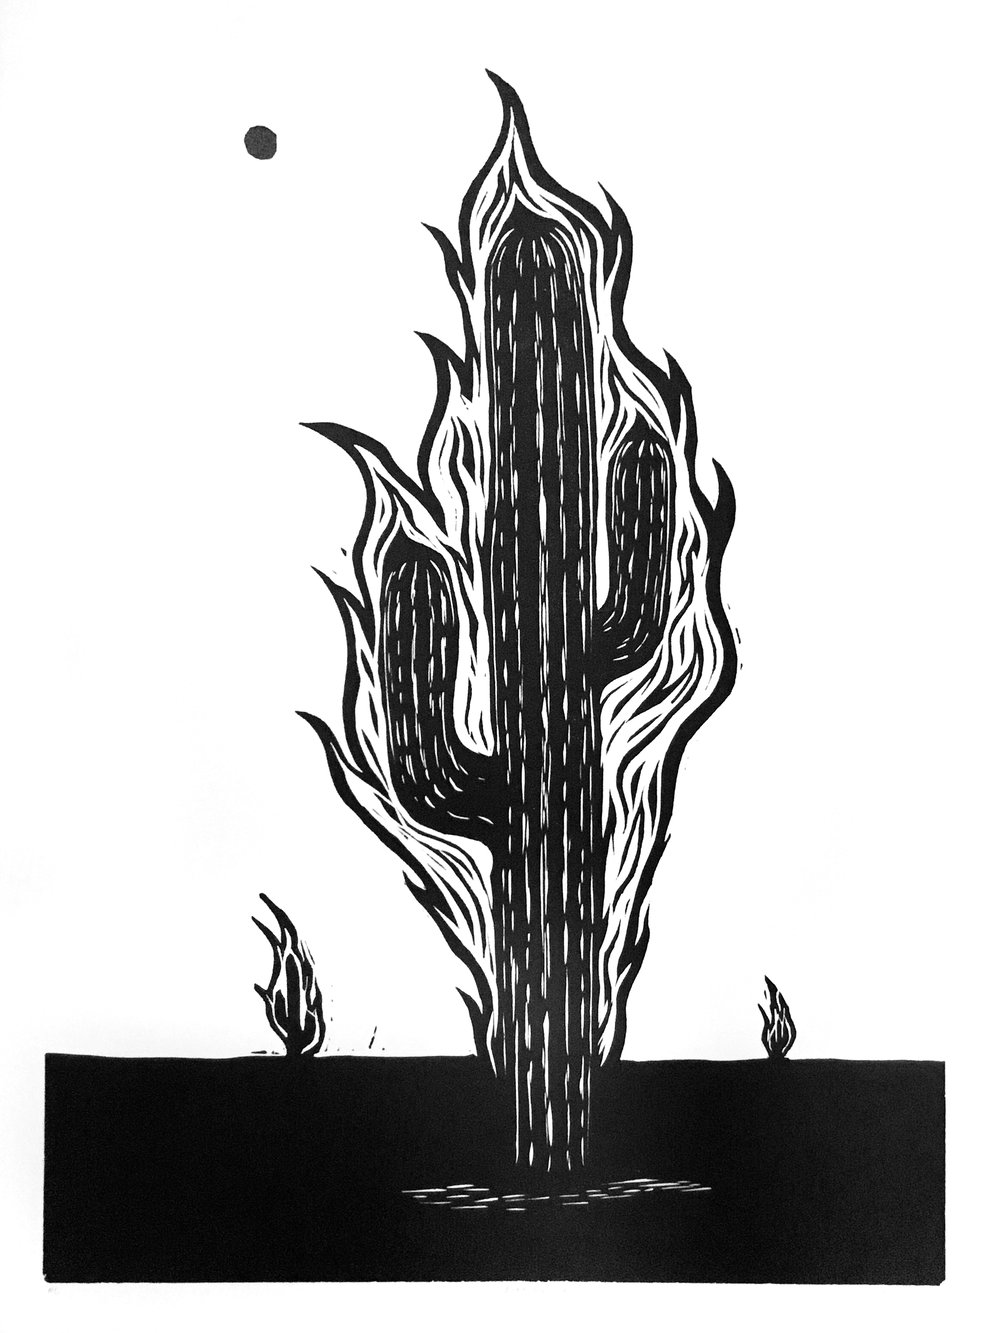 Image of Burning Cactus by Hartwick Hansen